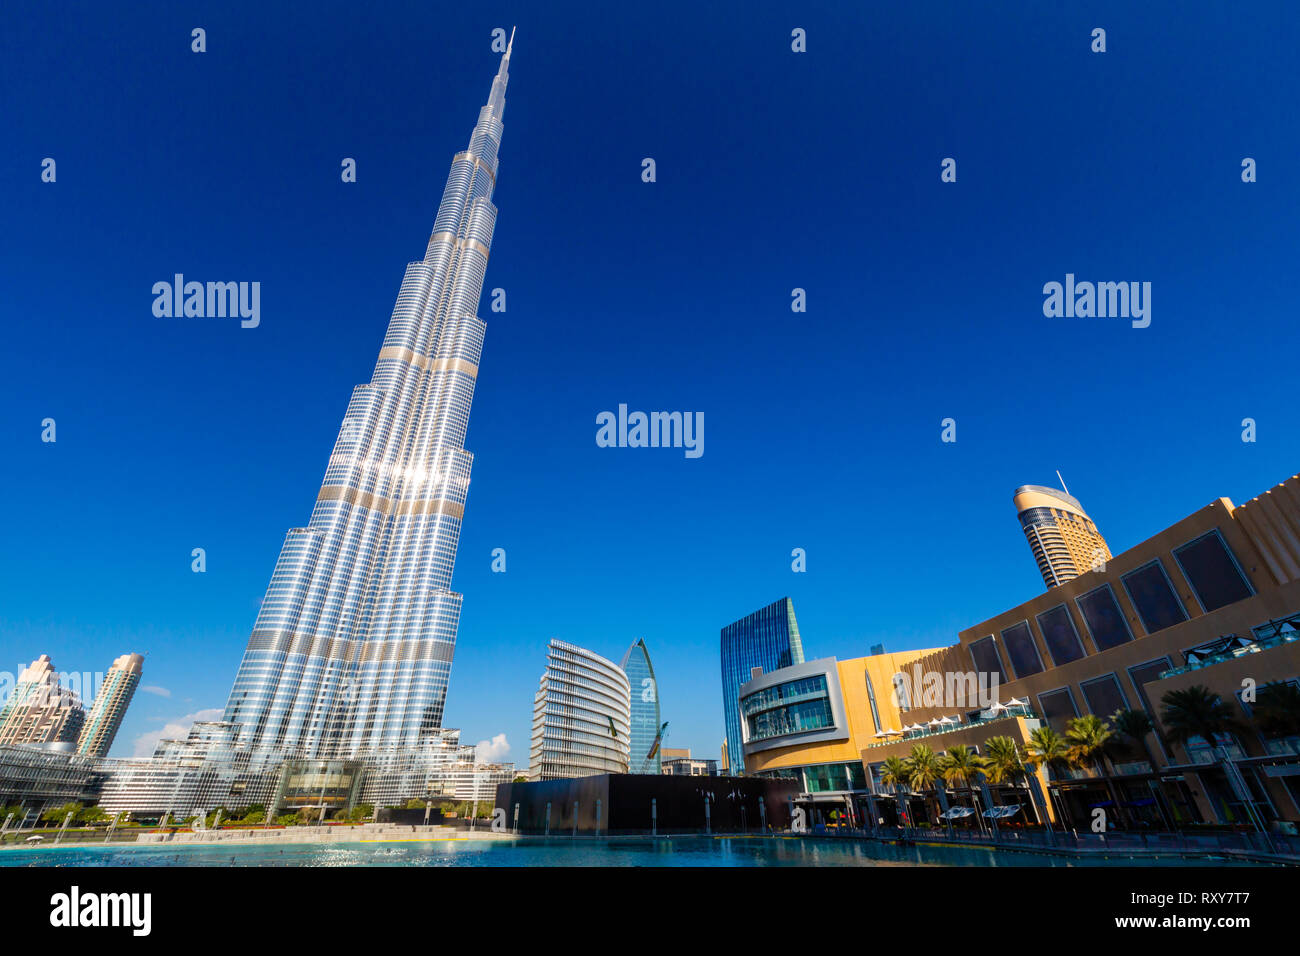 Burj Khalifa Tower in Dubai, United Arab Emirates is the tallest building in the world. Stock Photo